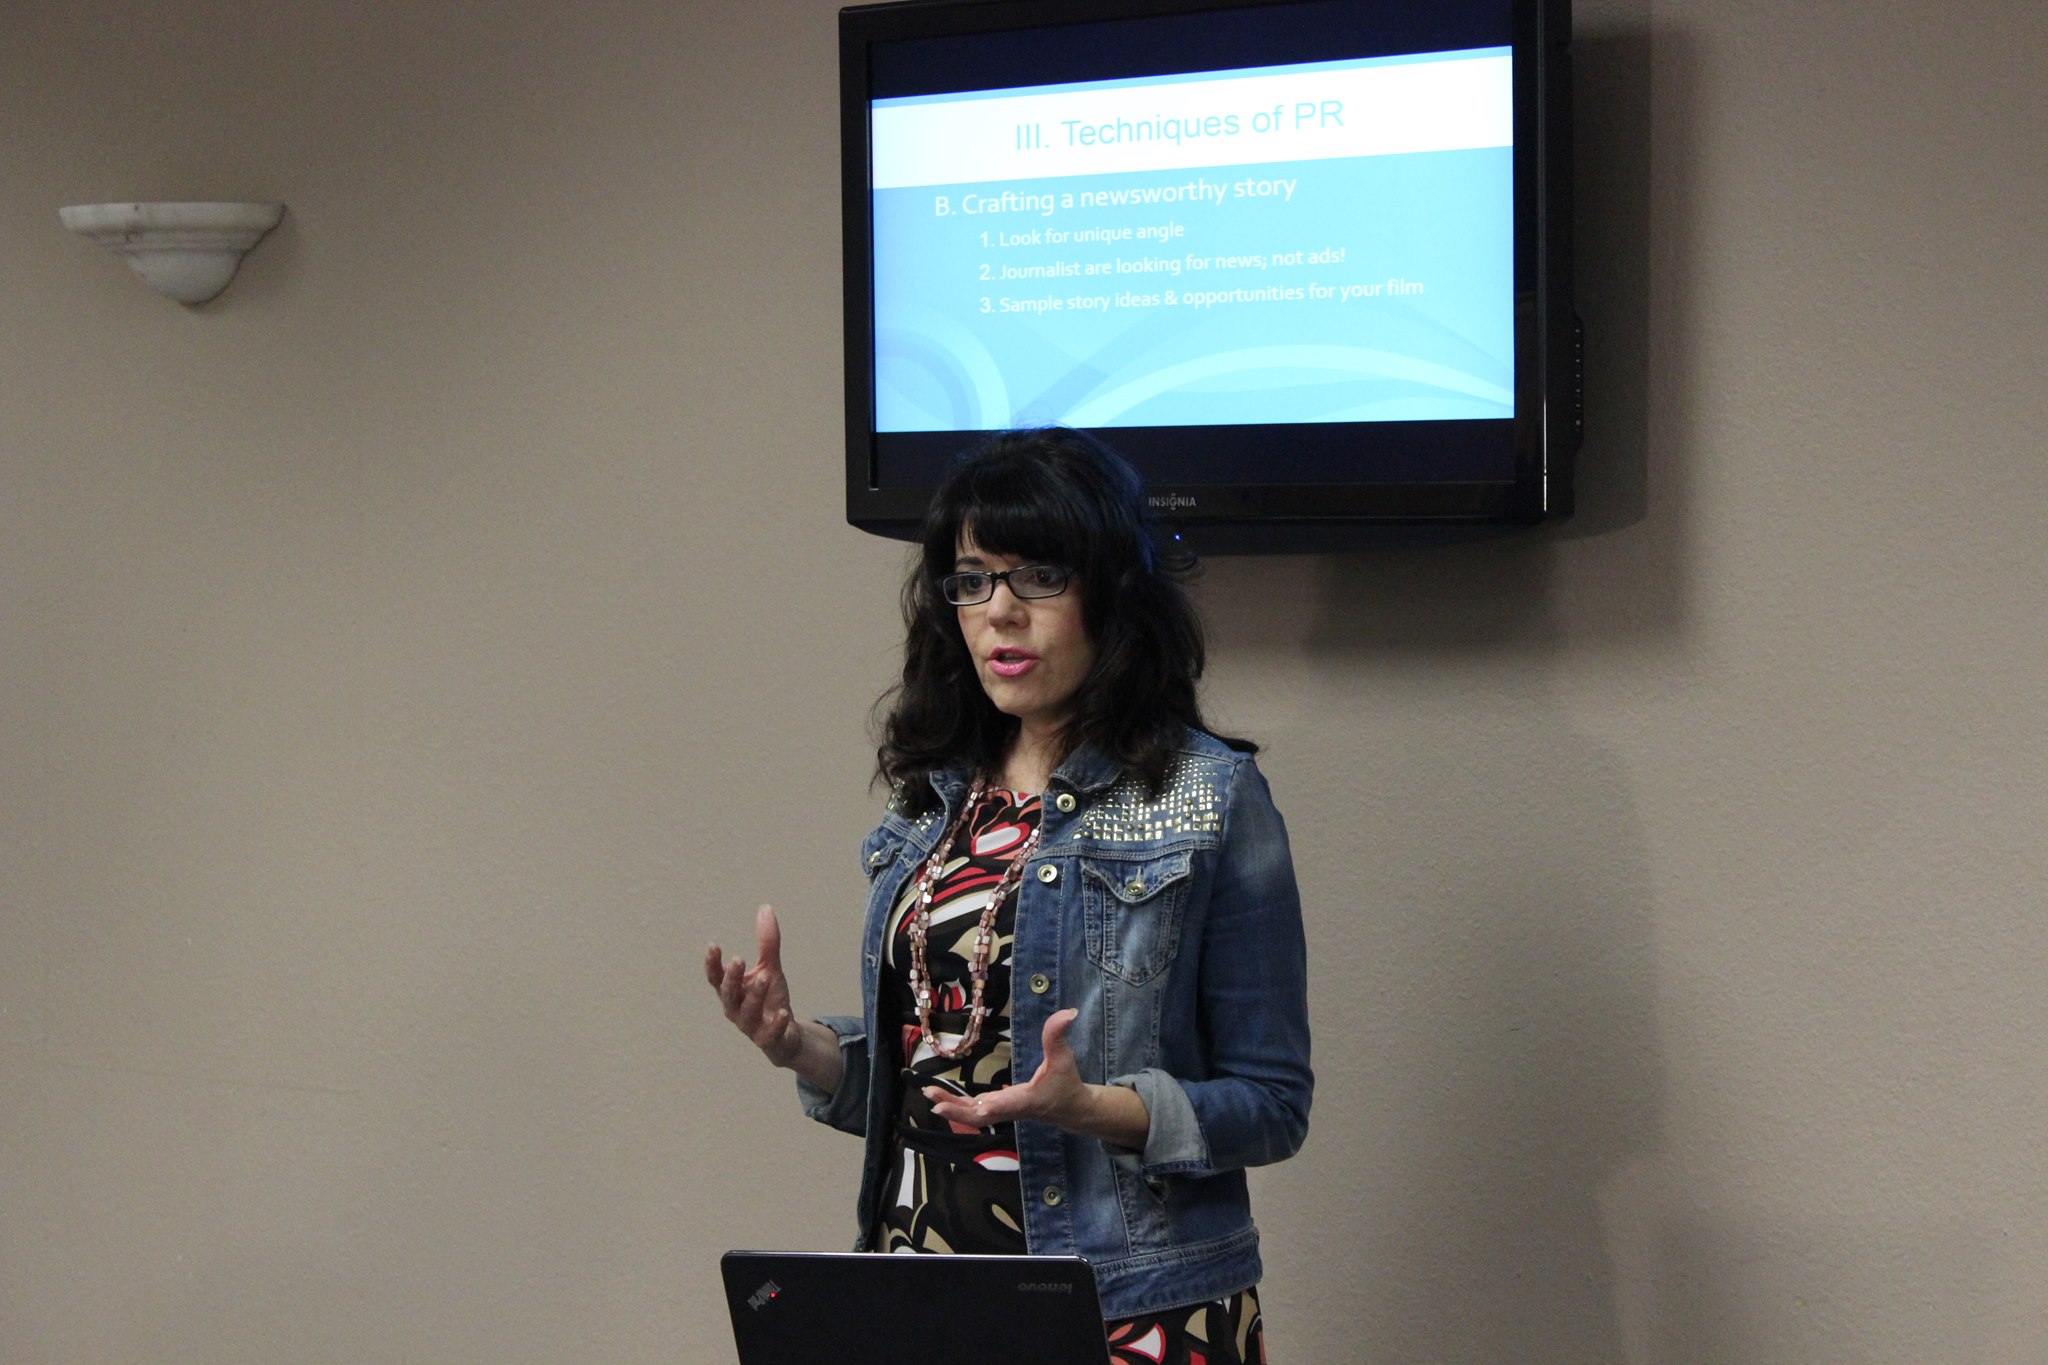 Cheryl Wicker teaching PR at a 2014 media conference